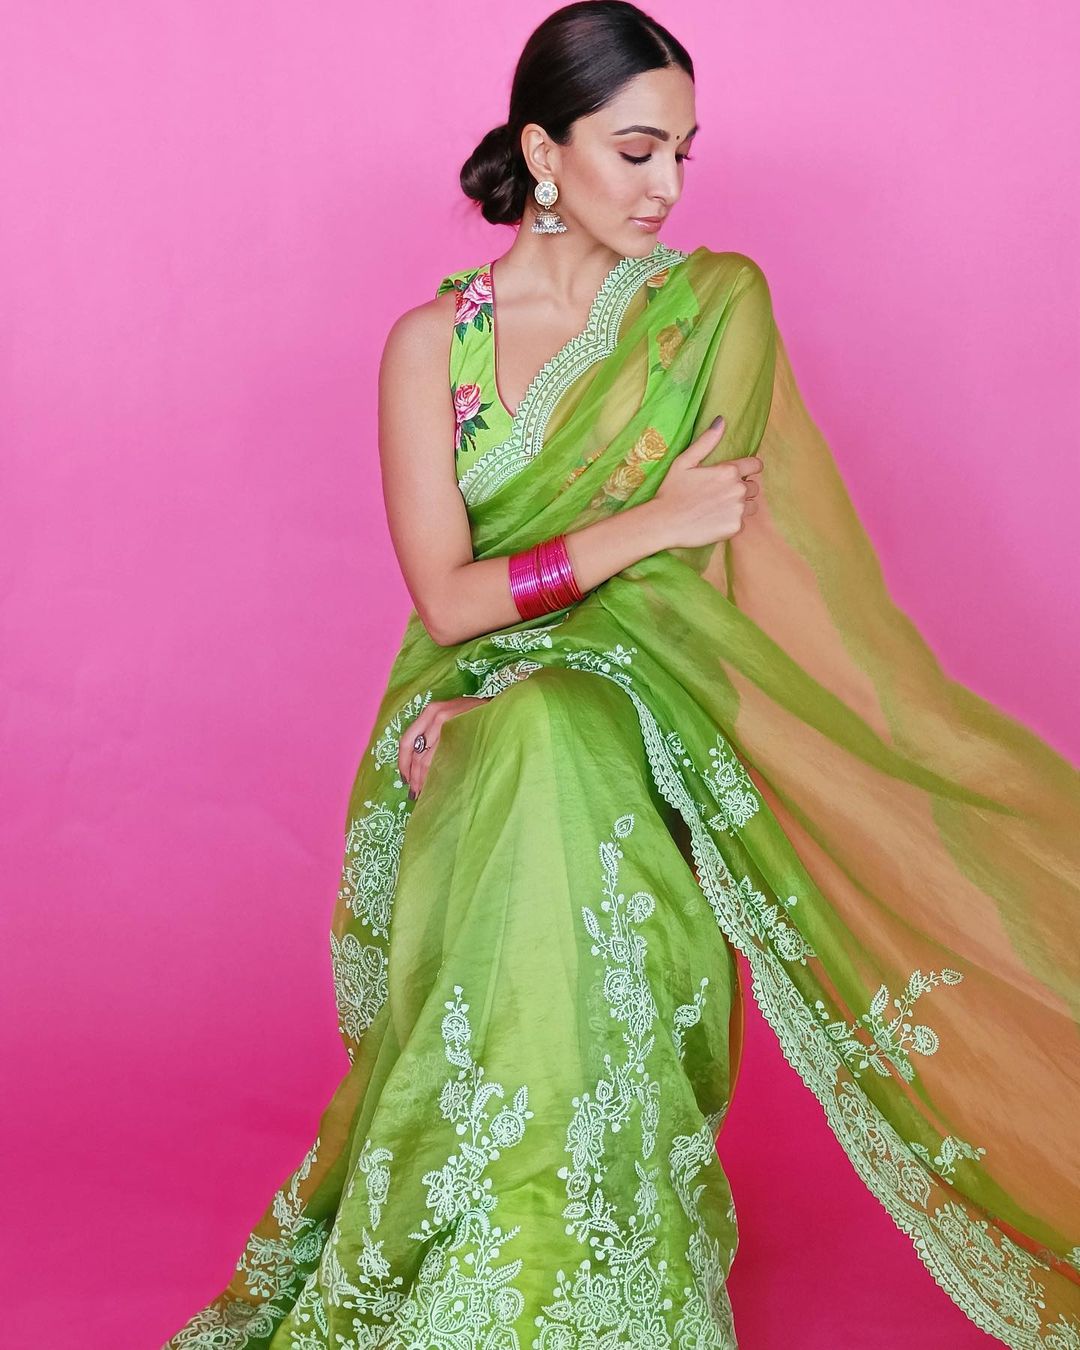 Kiara Advani's Diwali look in green sheer saree